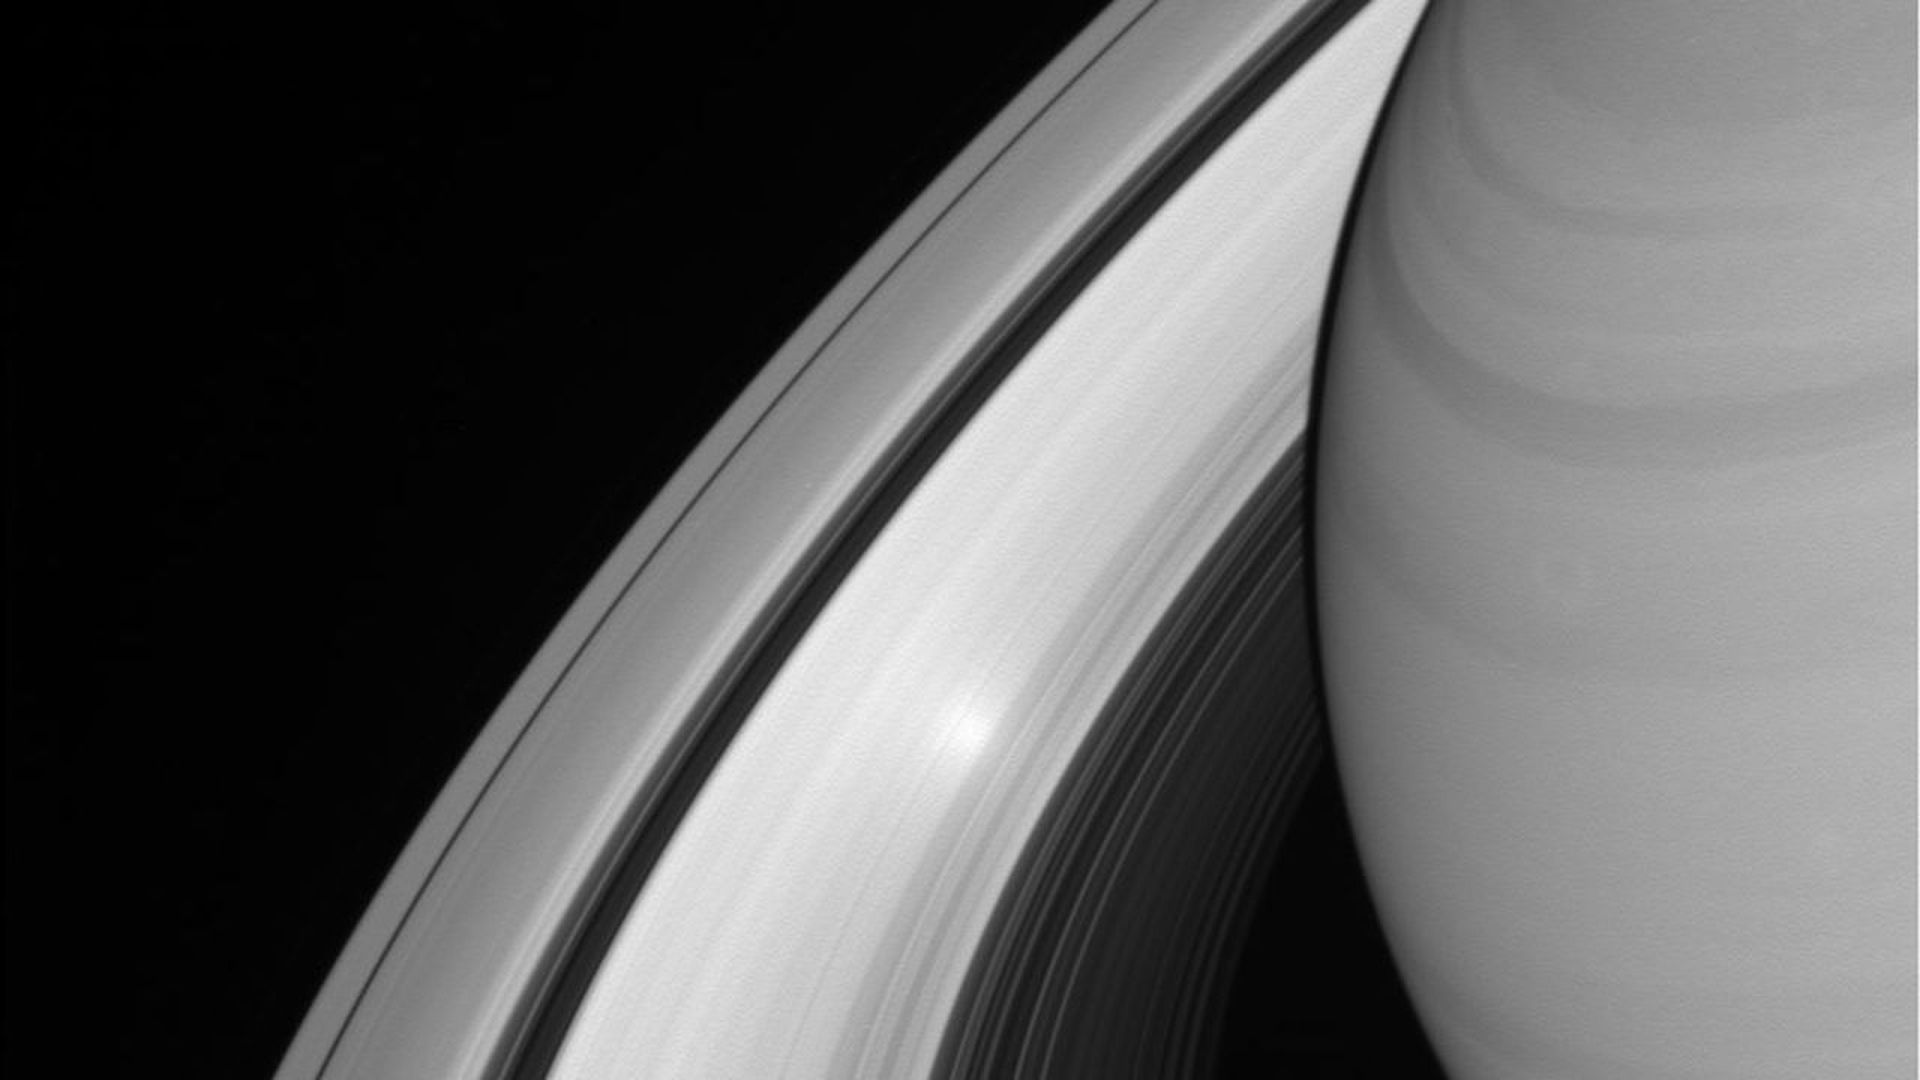 Saturn as seen by Cassini. Photo: NASA/JPL-Caltech/SSI